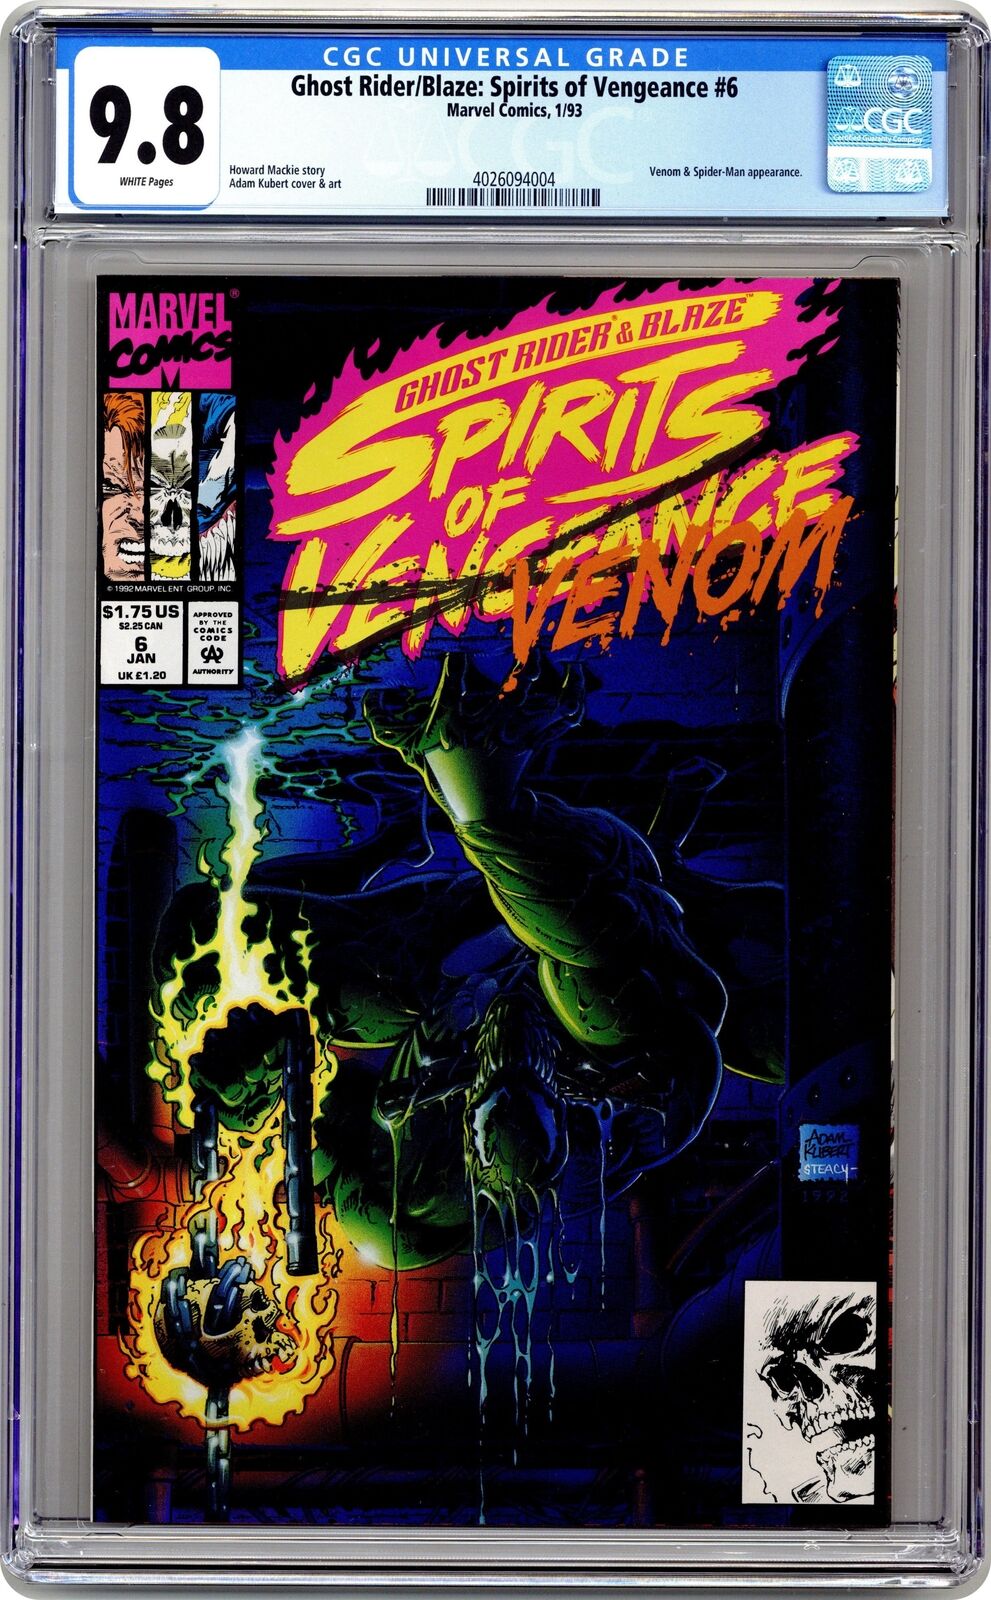 Ghost Rider Blaze Spirits of Vengeance #6 CGC 9.8 1993 4026094004